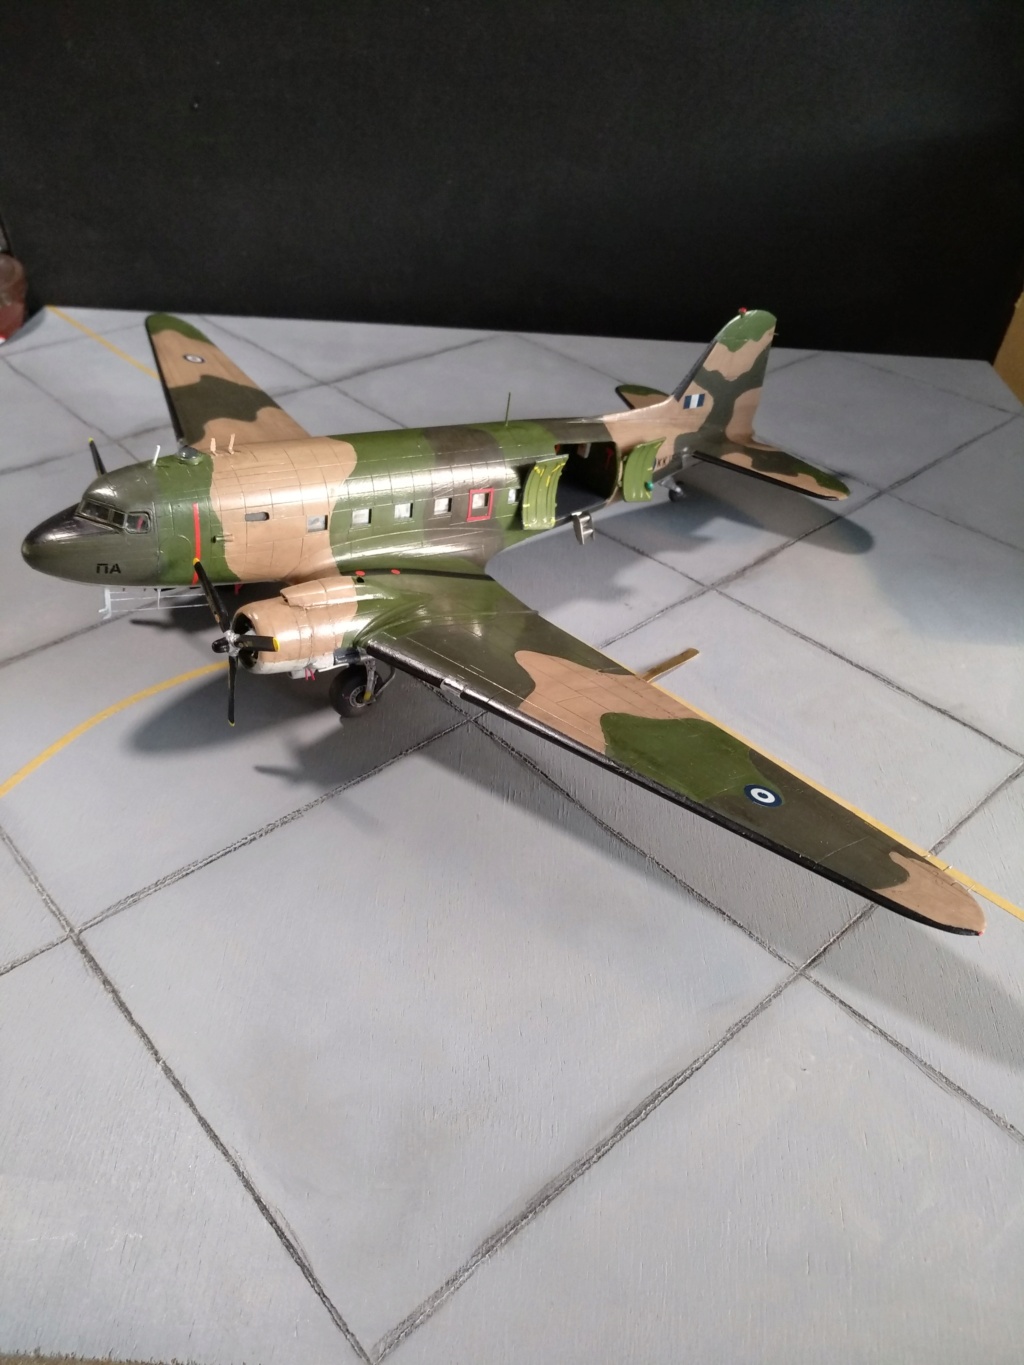   [Italeri] C-47 Skytrain 1/72. Armee de l'Air Grecque. (s/n KK 156) Img_2077